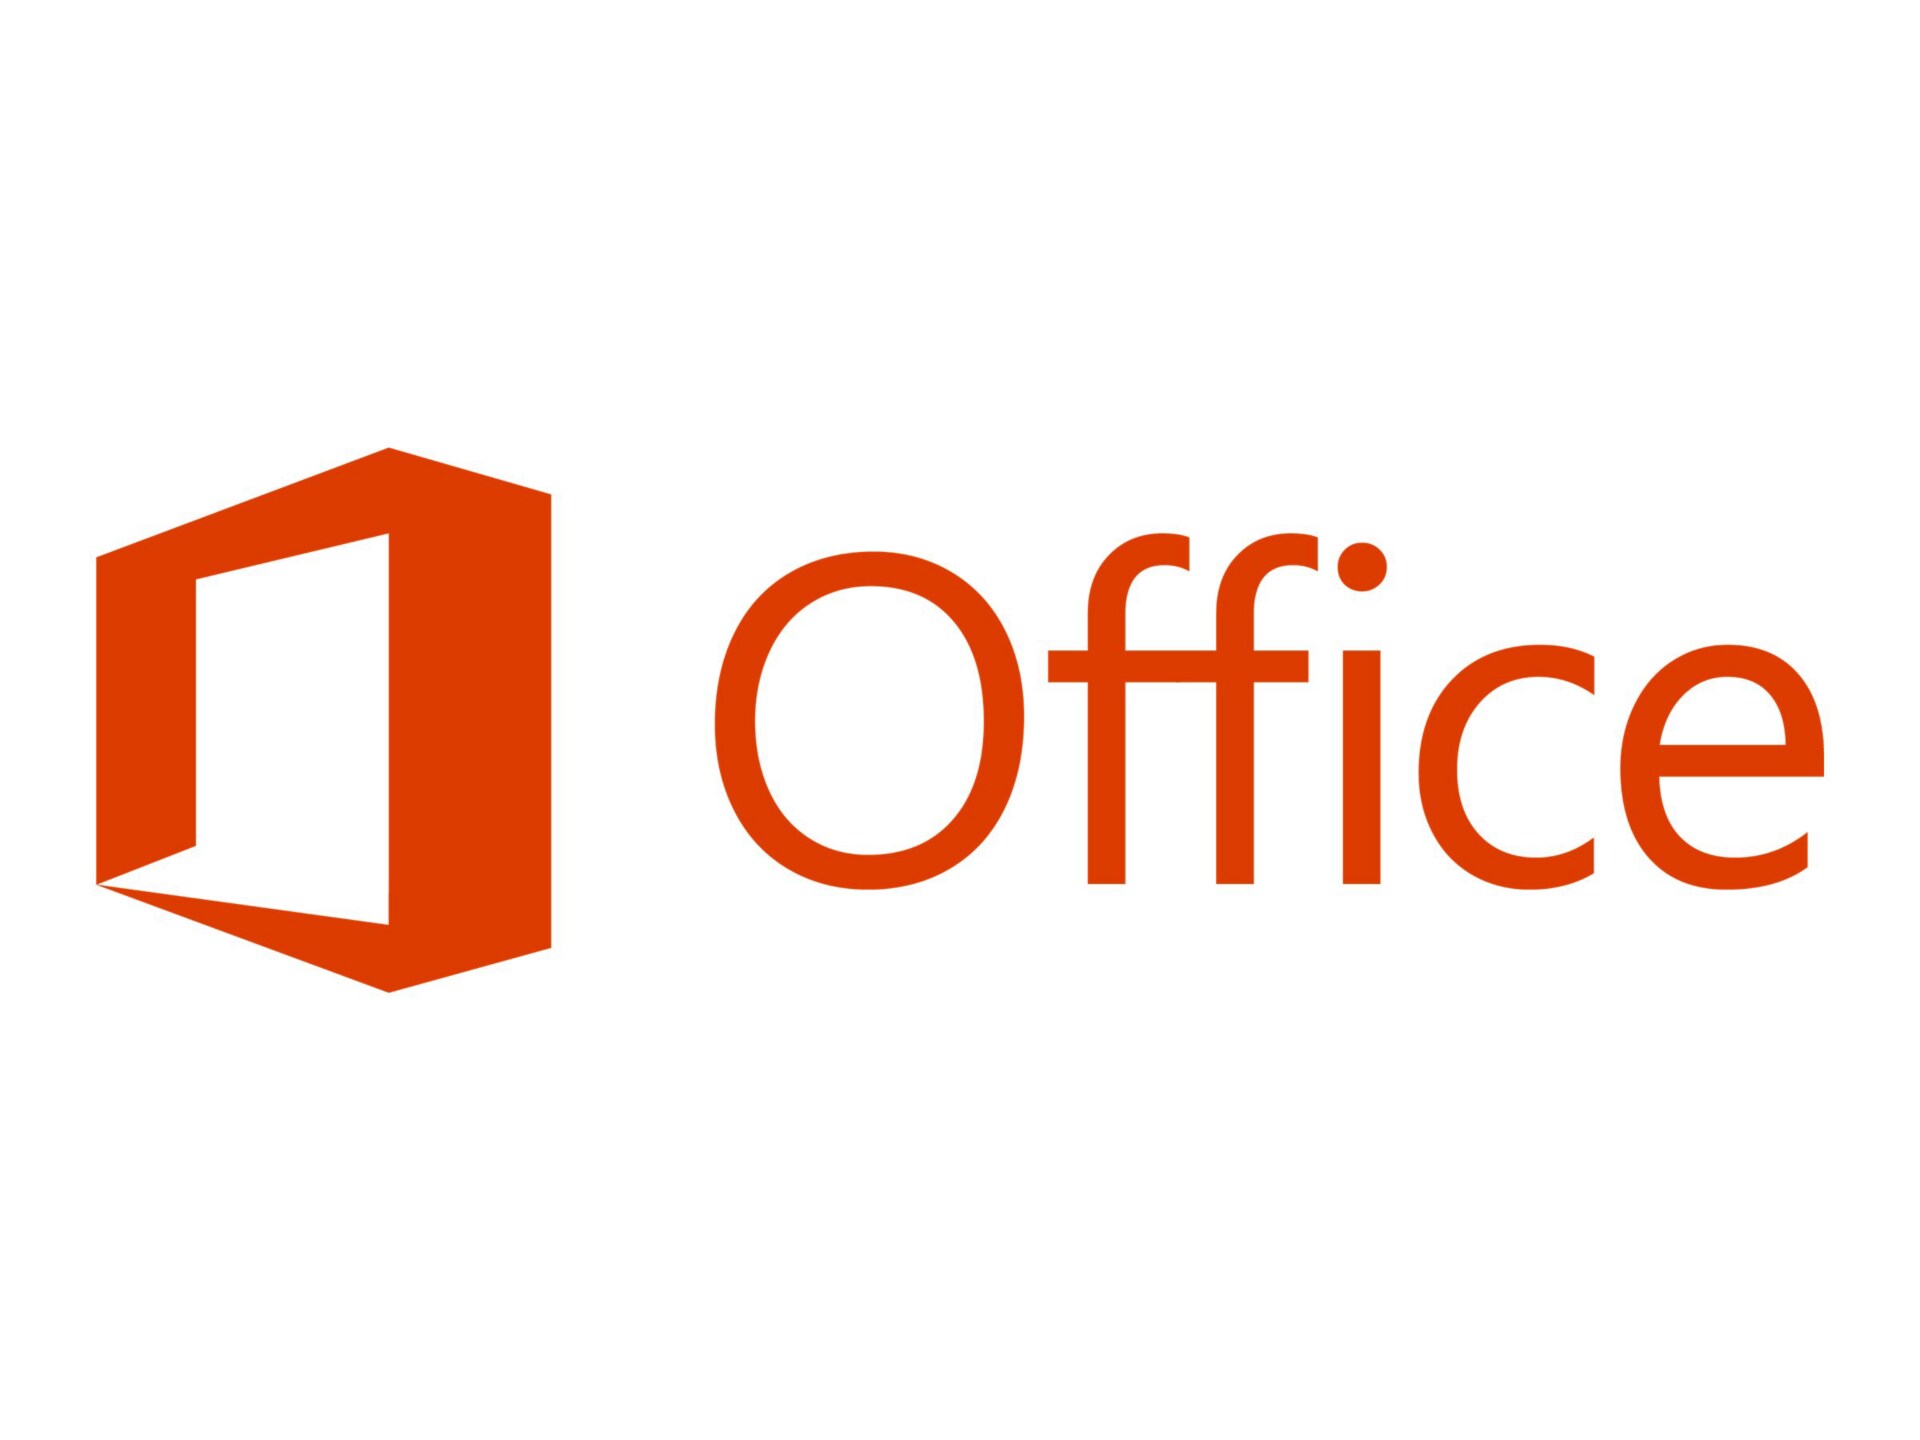 Microsoft Office Standard - license & software assurance